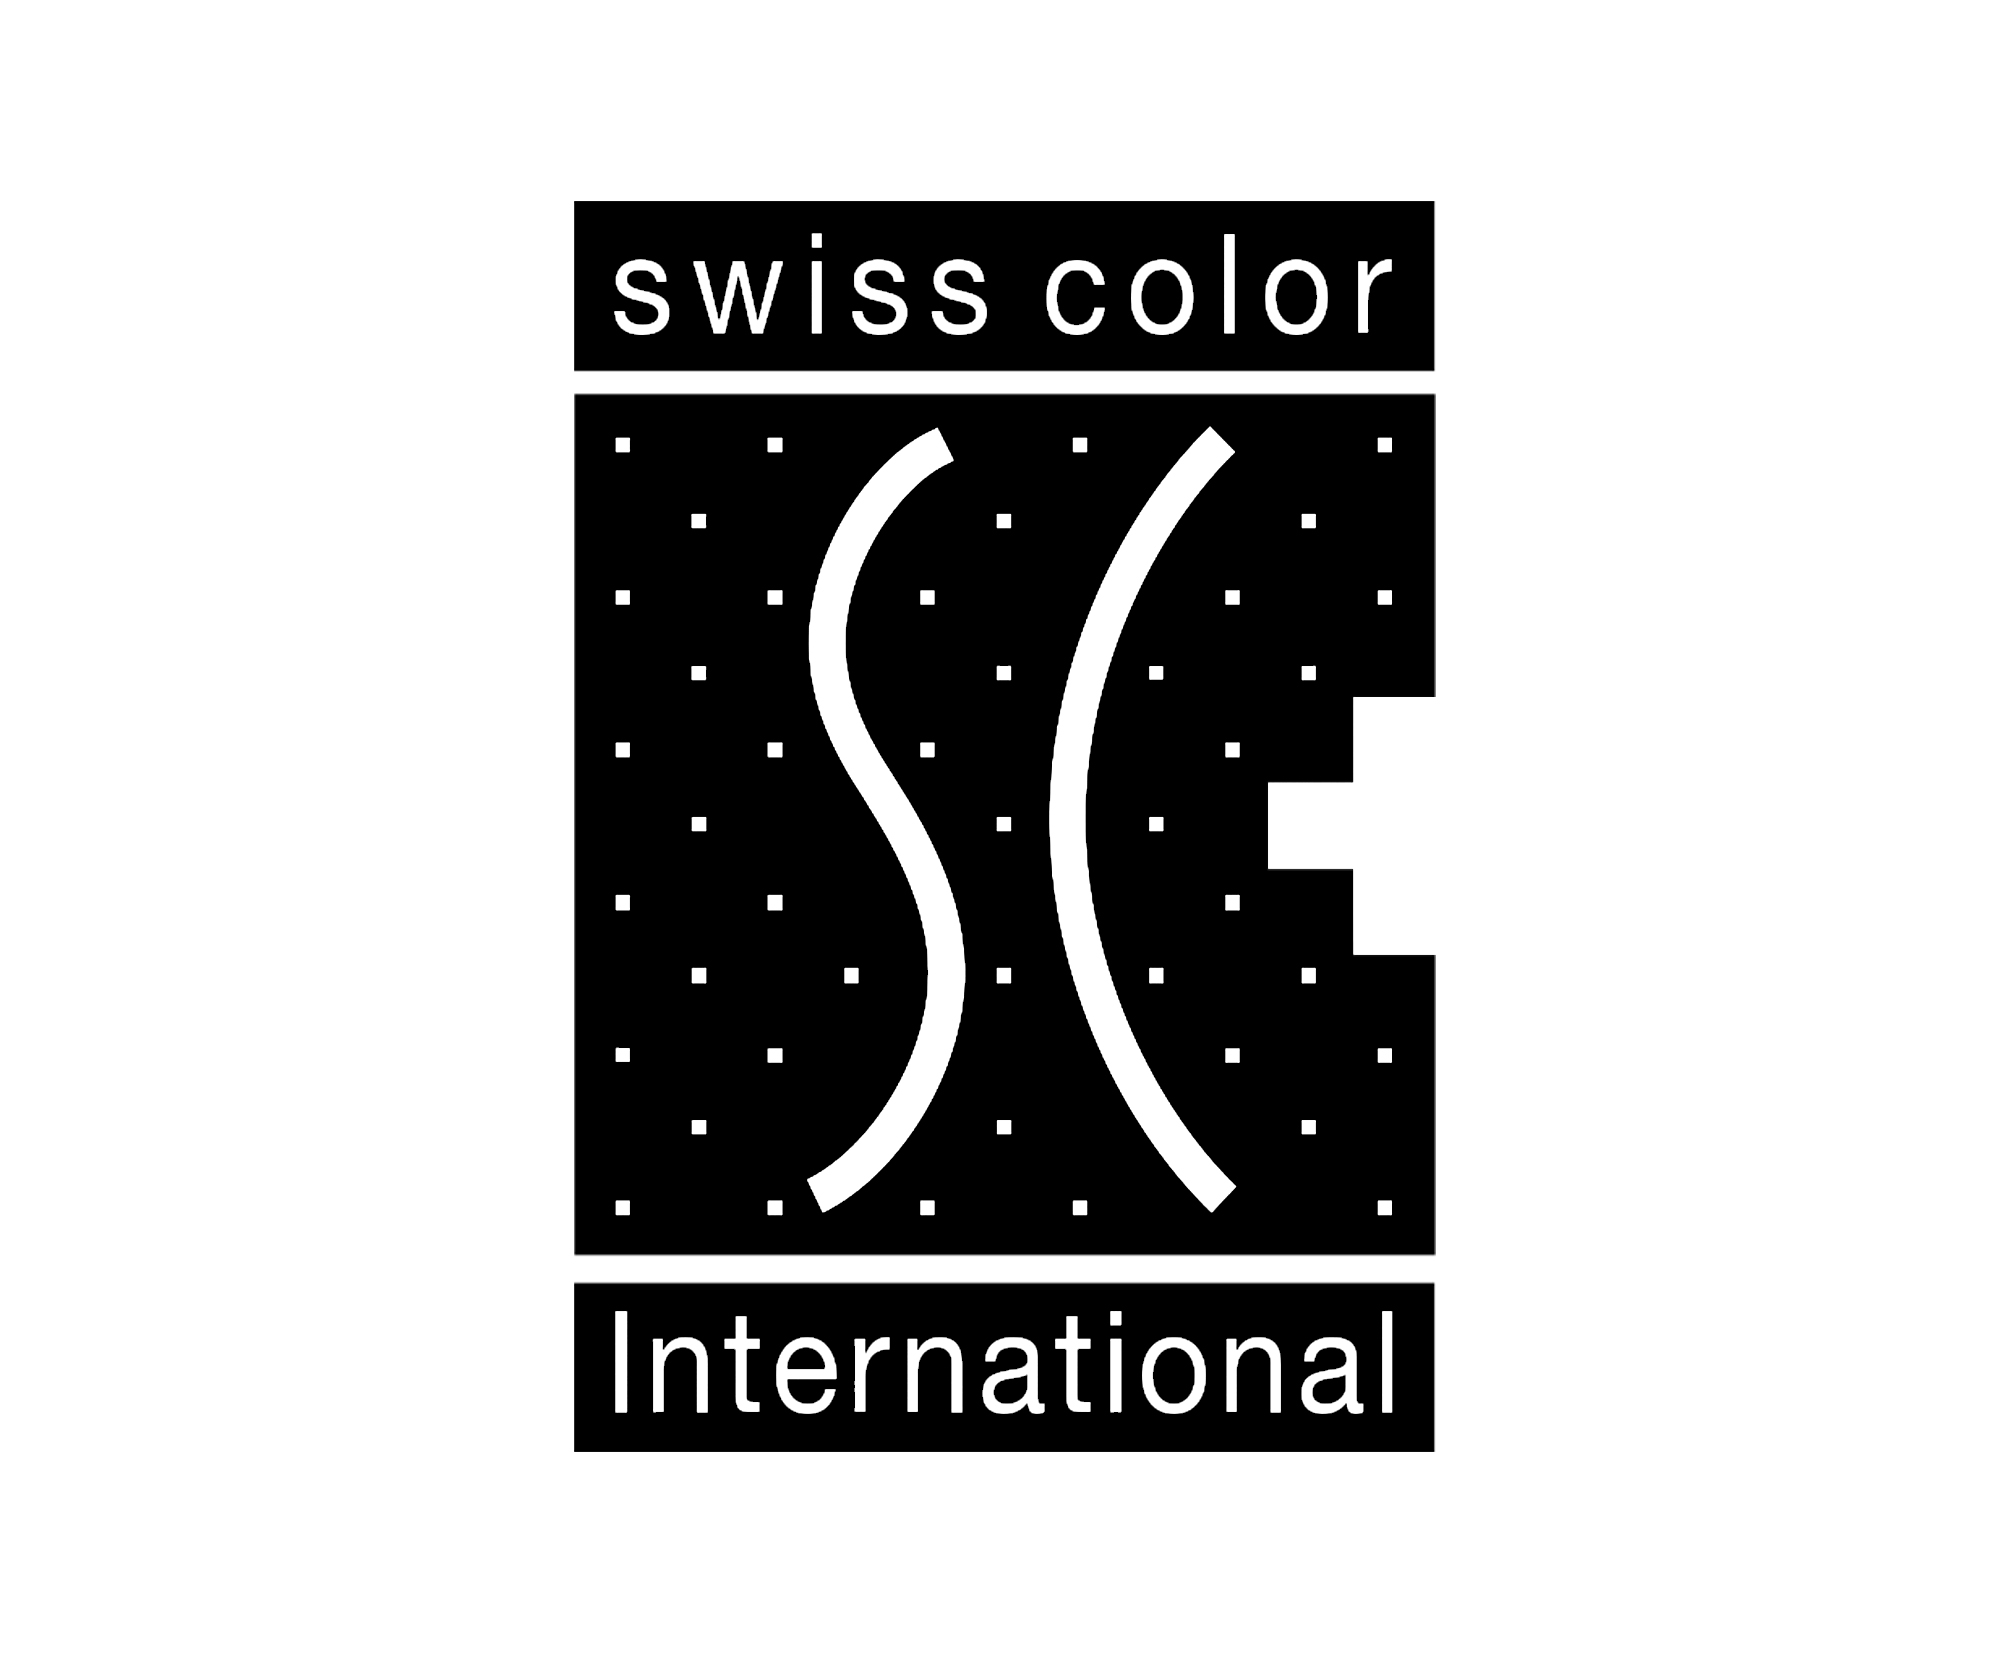 Swiss color